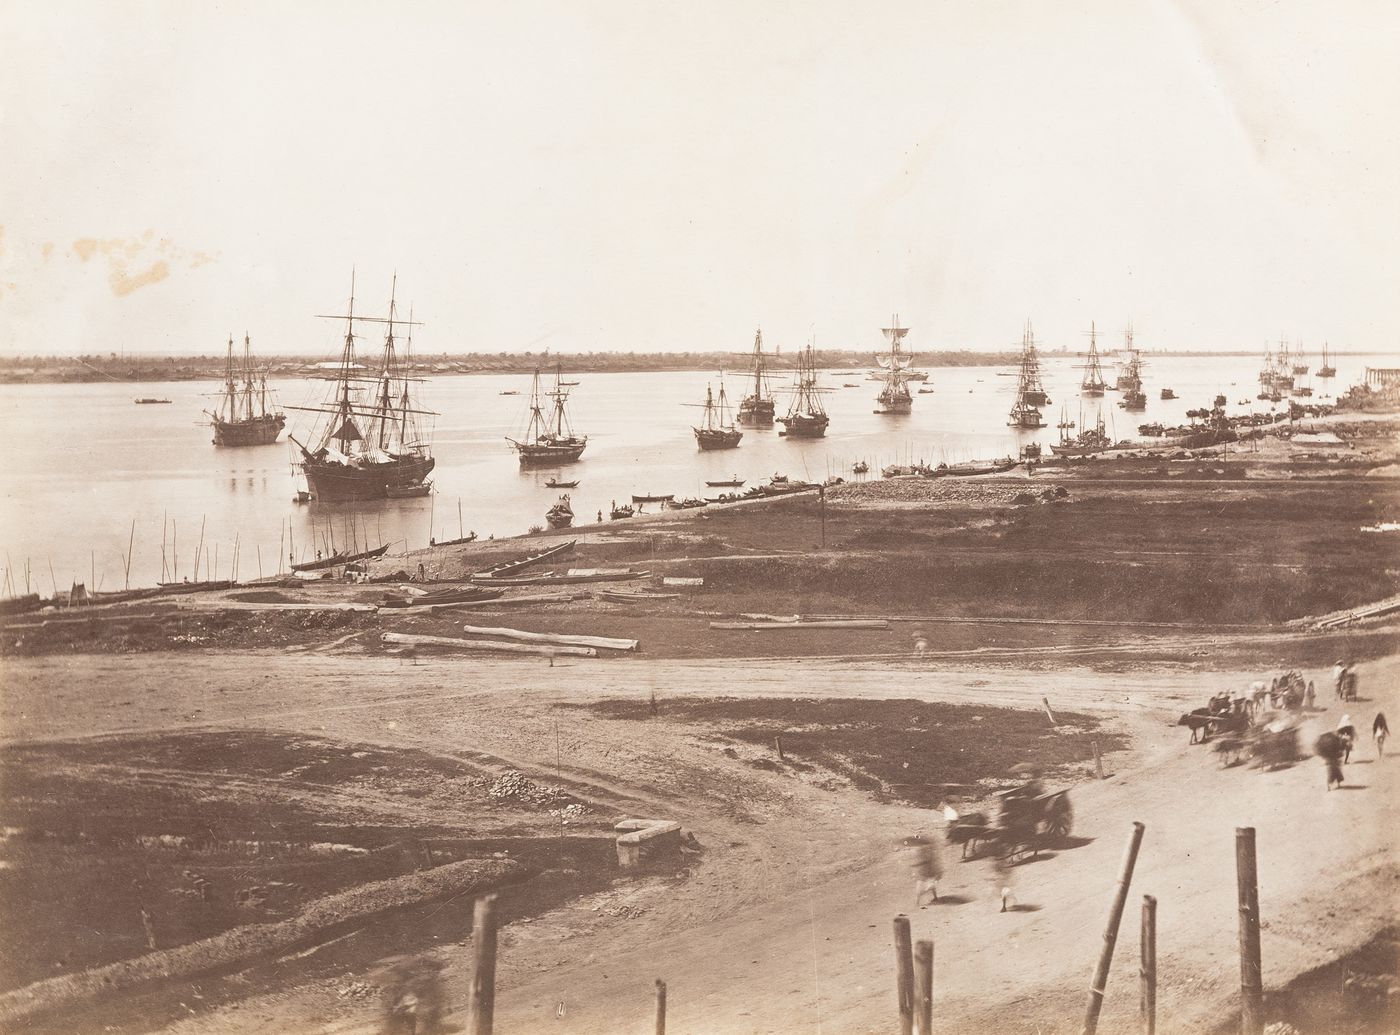 View of the Rangoon River (now known as Yangon River), Burma (now Myanmar)